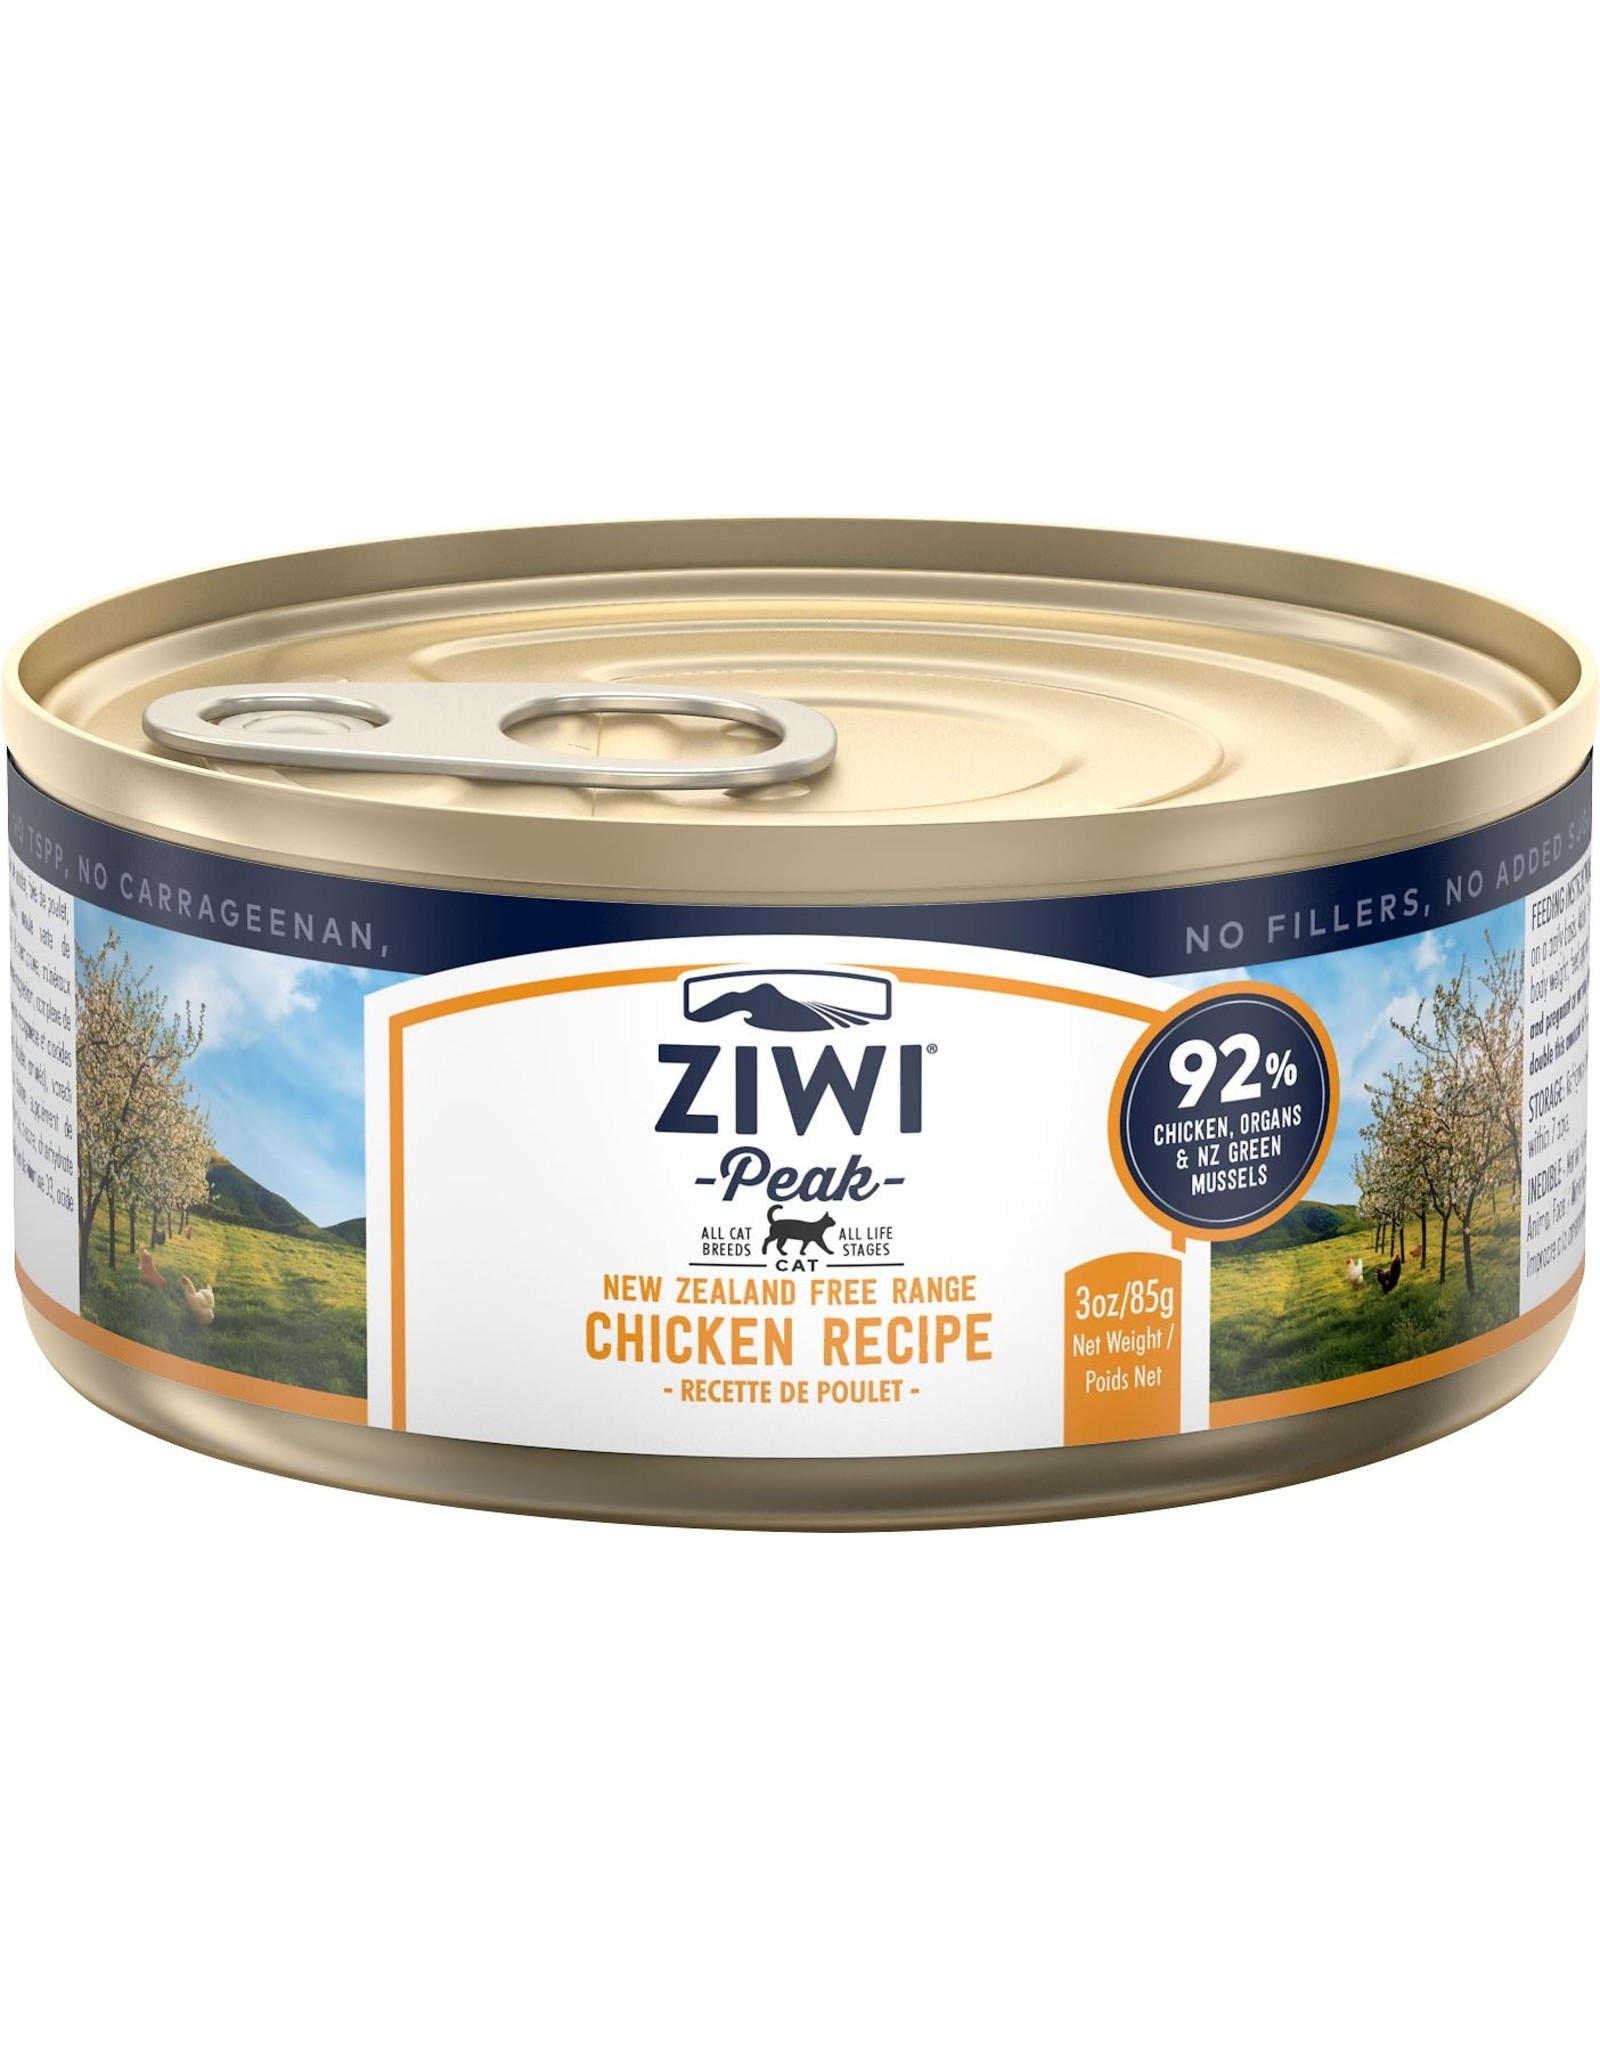 Ziwi Peak ZIWI PEAK CAT NEW ZEALAND FREE RANGE CHICKEN